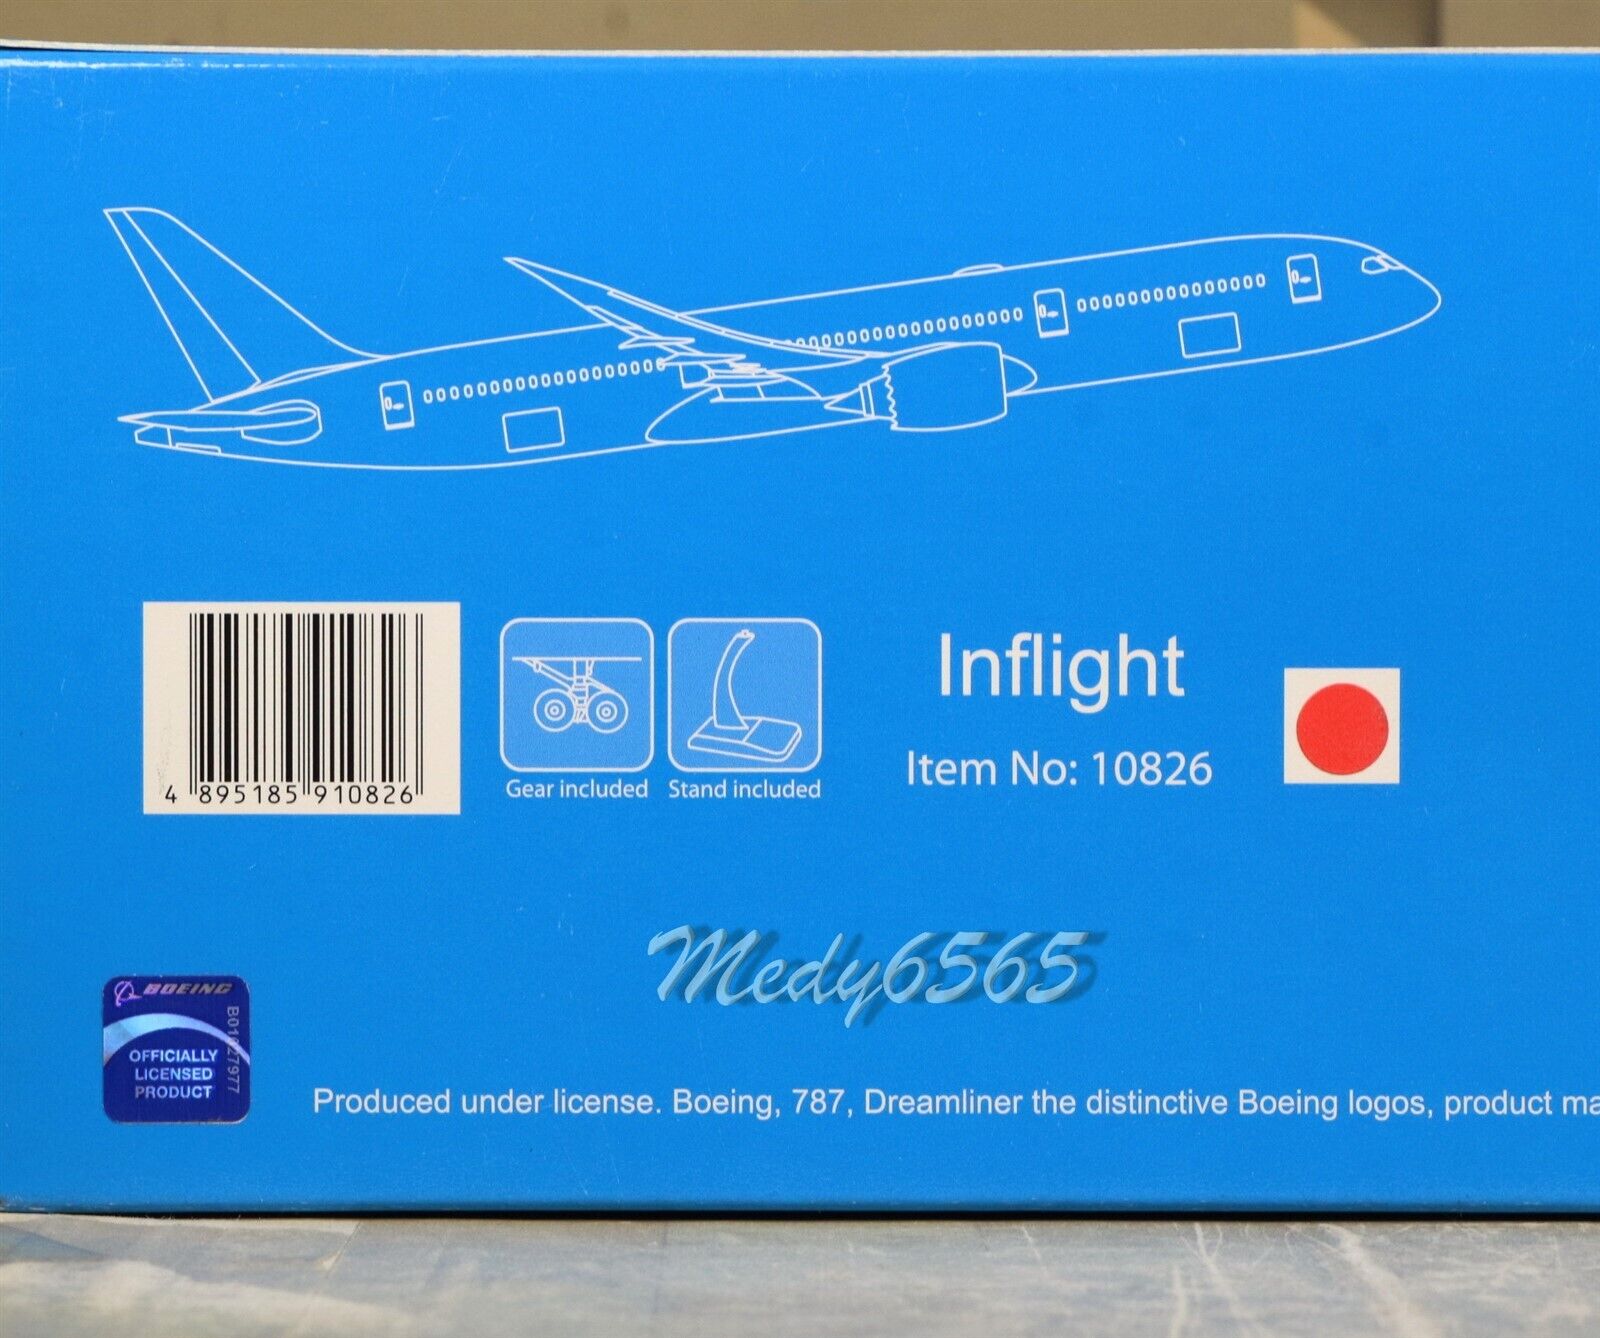 Hogan KLM "New Color - IF" Boeing B787-9 "VERY RARE" 1/200